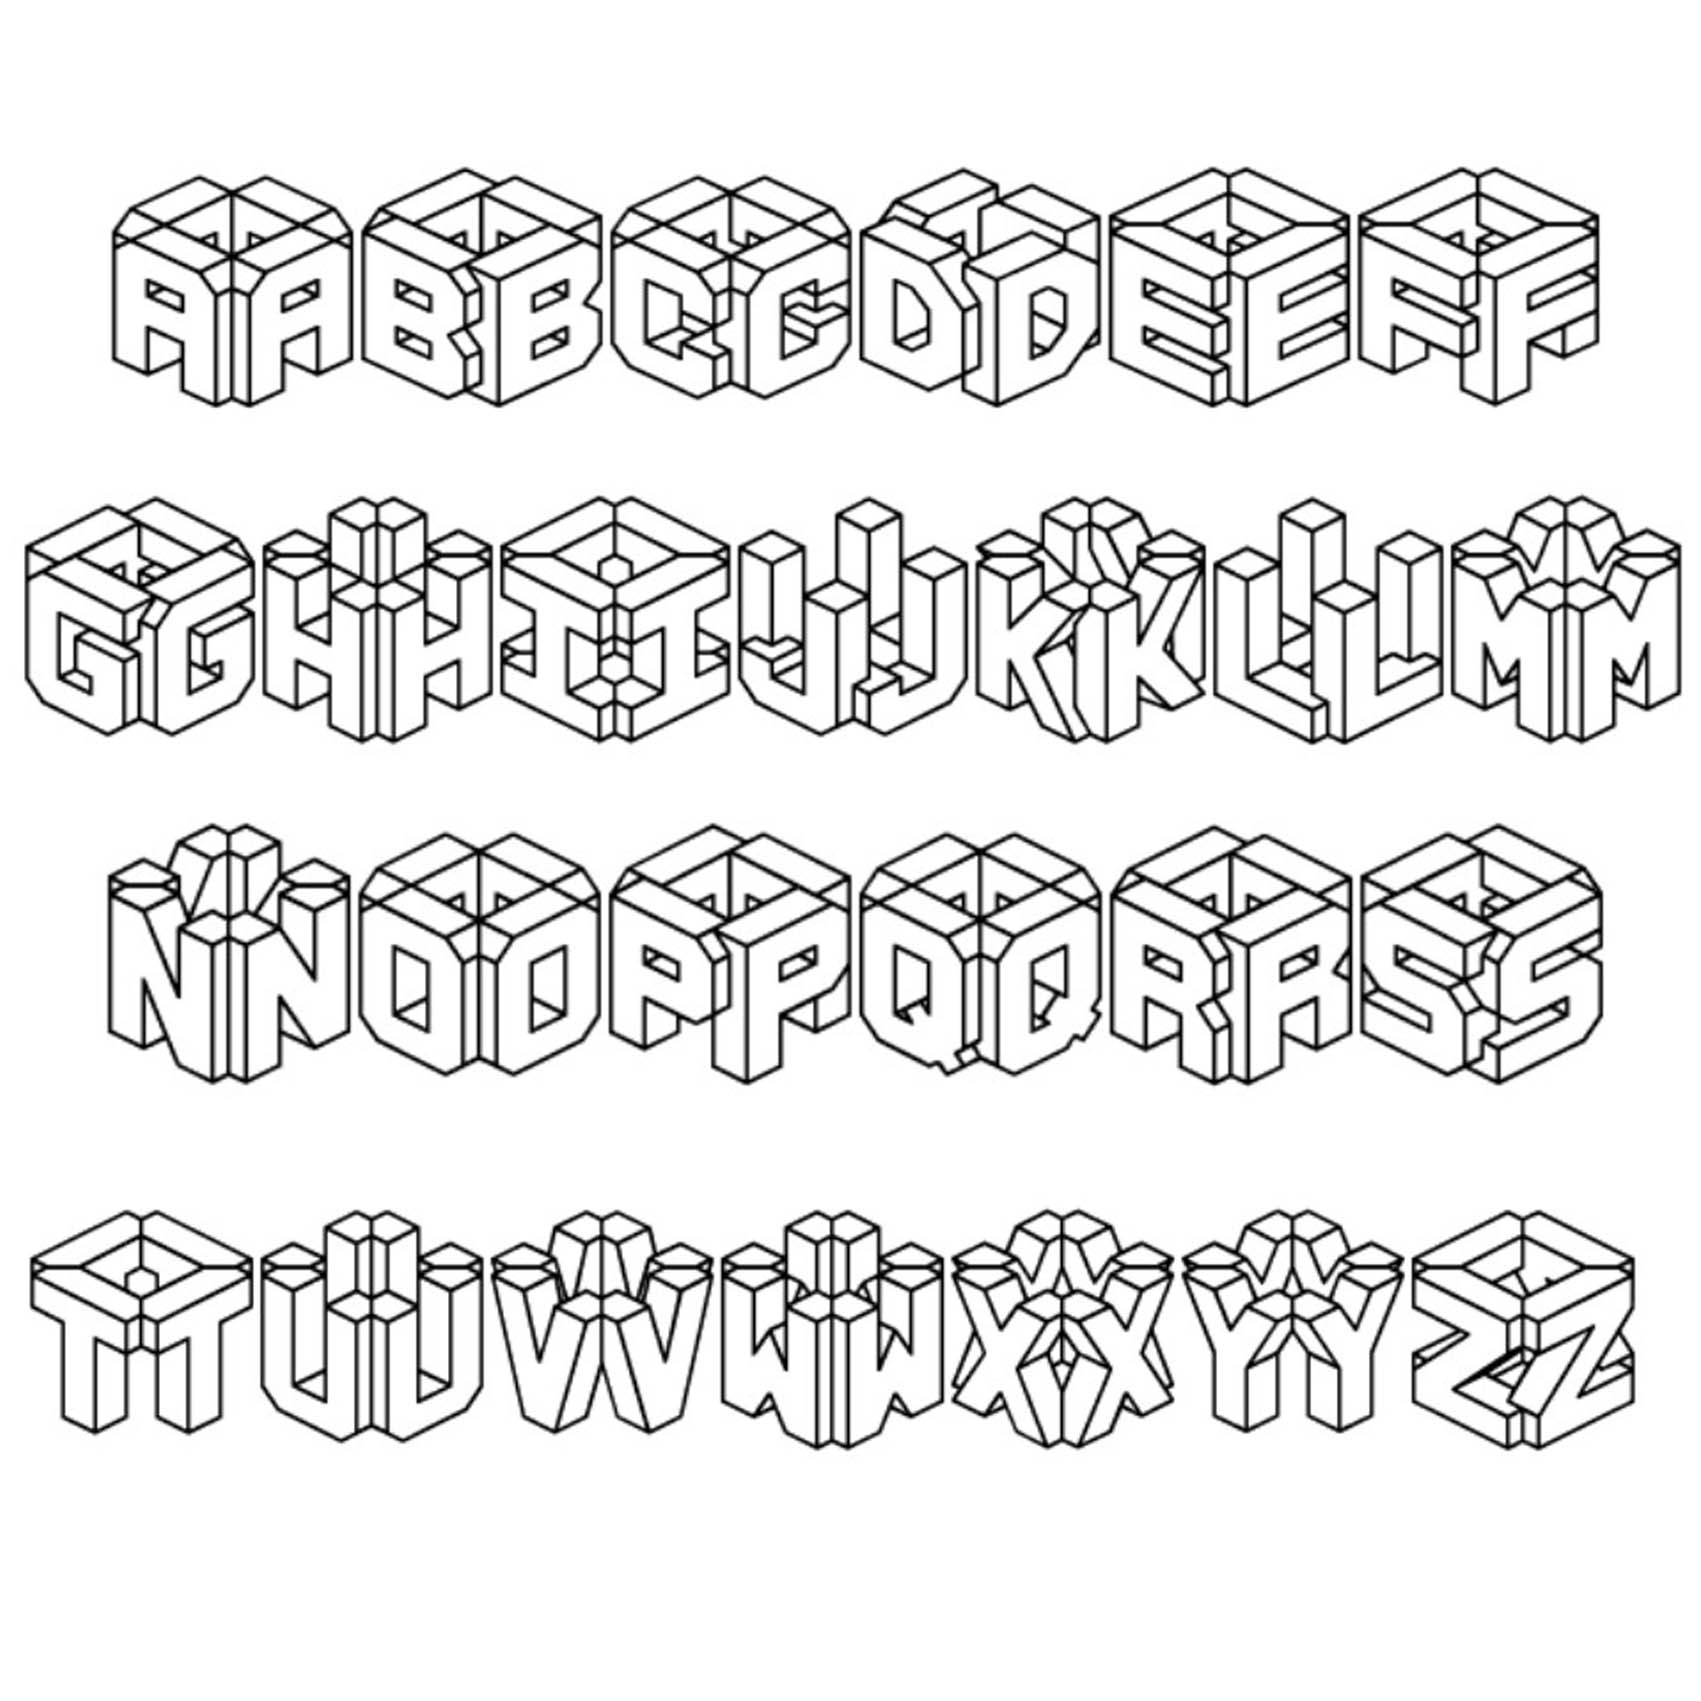 3D Graffiti Letters Styles Alphabet